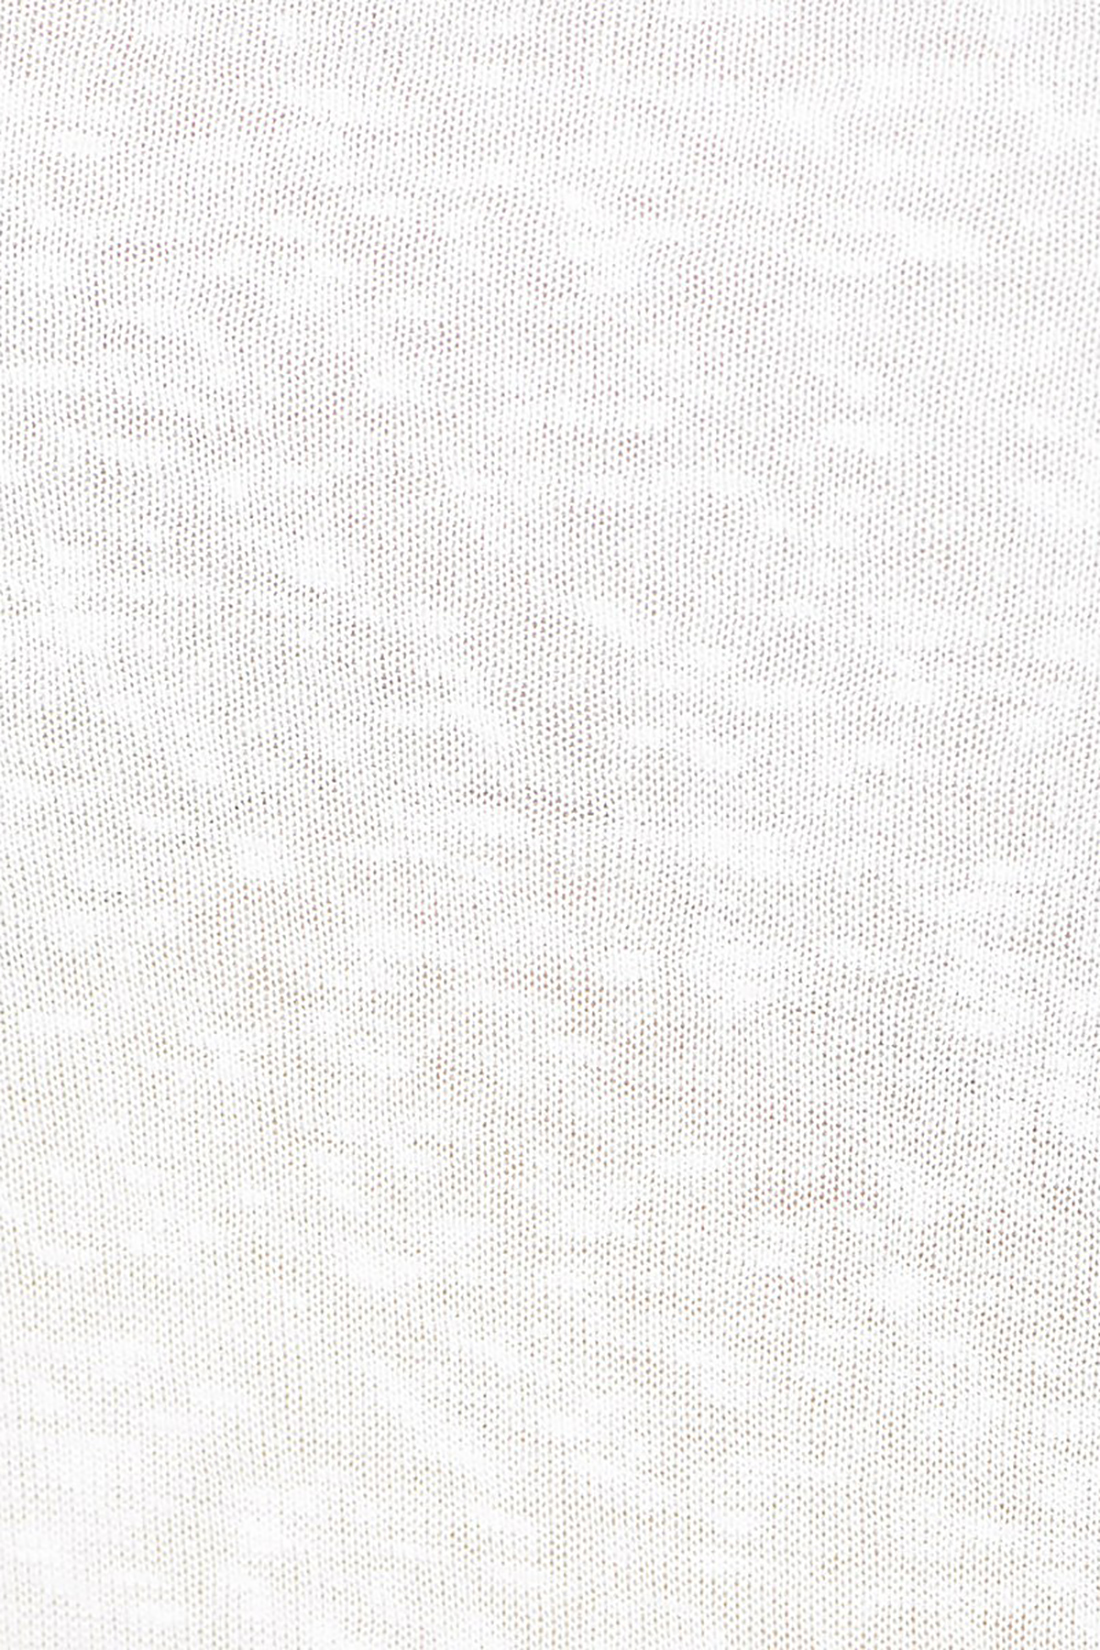 Топ с кружевной спинкой (арт. baon B268070), размер M, цвет белый Топ с кружевной спинкой (арт. baon B268070) - фото 3